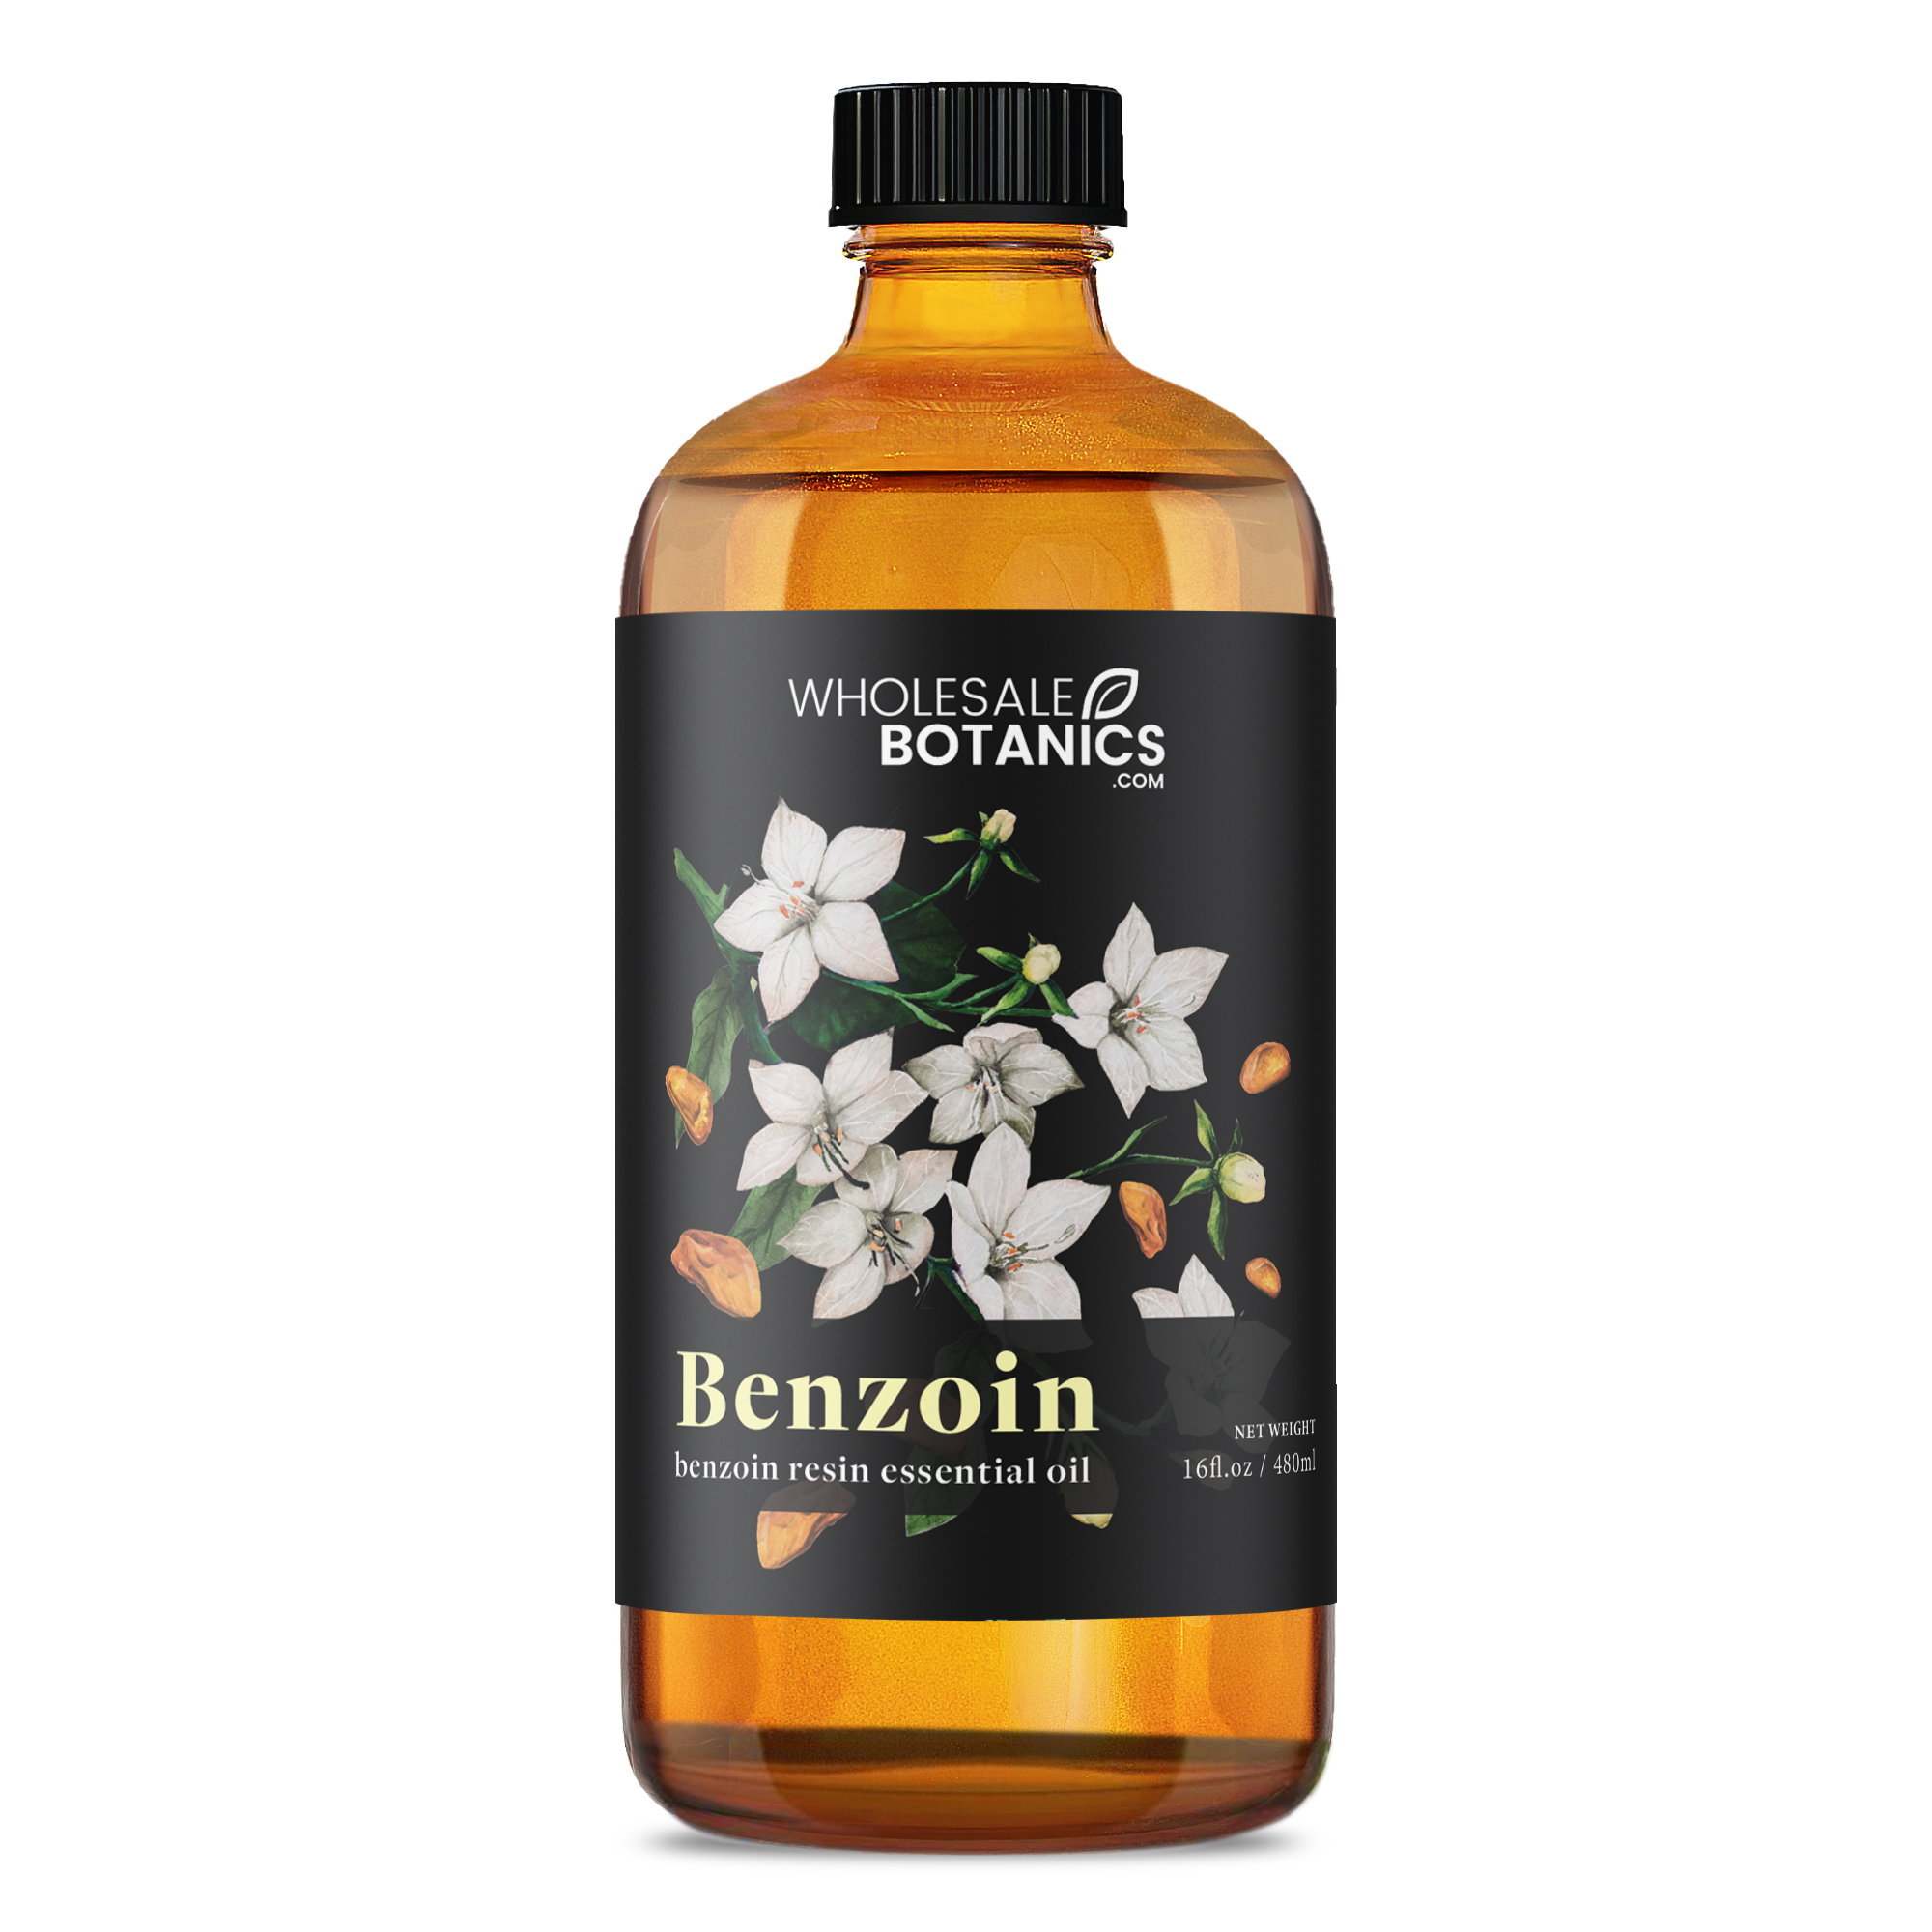 Benzoin Essential Oil